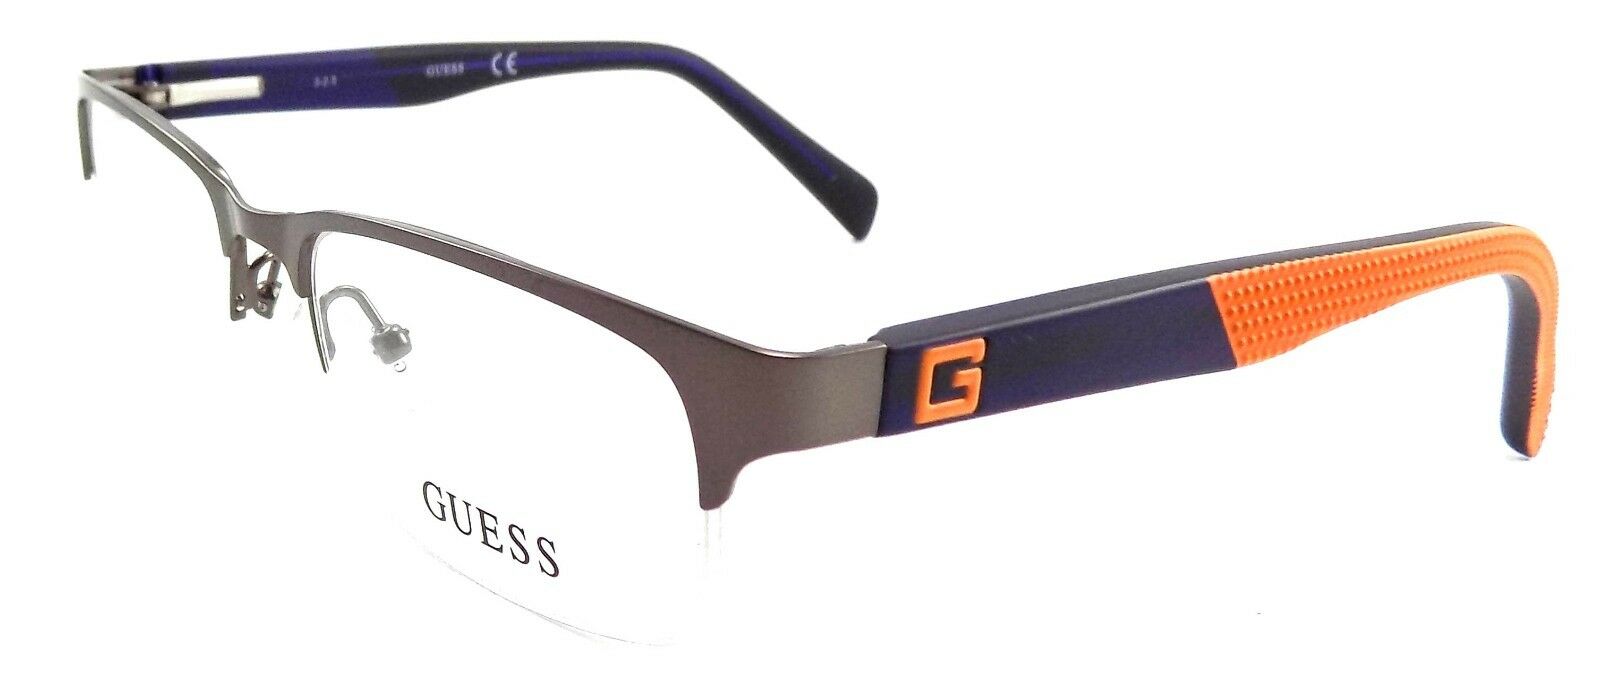 1-GUESS GU9148 009 Eyeglasses Frames Half Rim 48-16-130 Gunmetal Gray + CASE-664689700448-IKSpecs